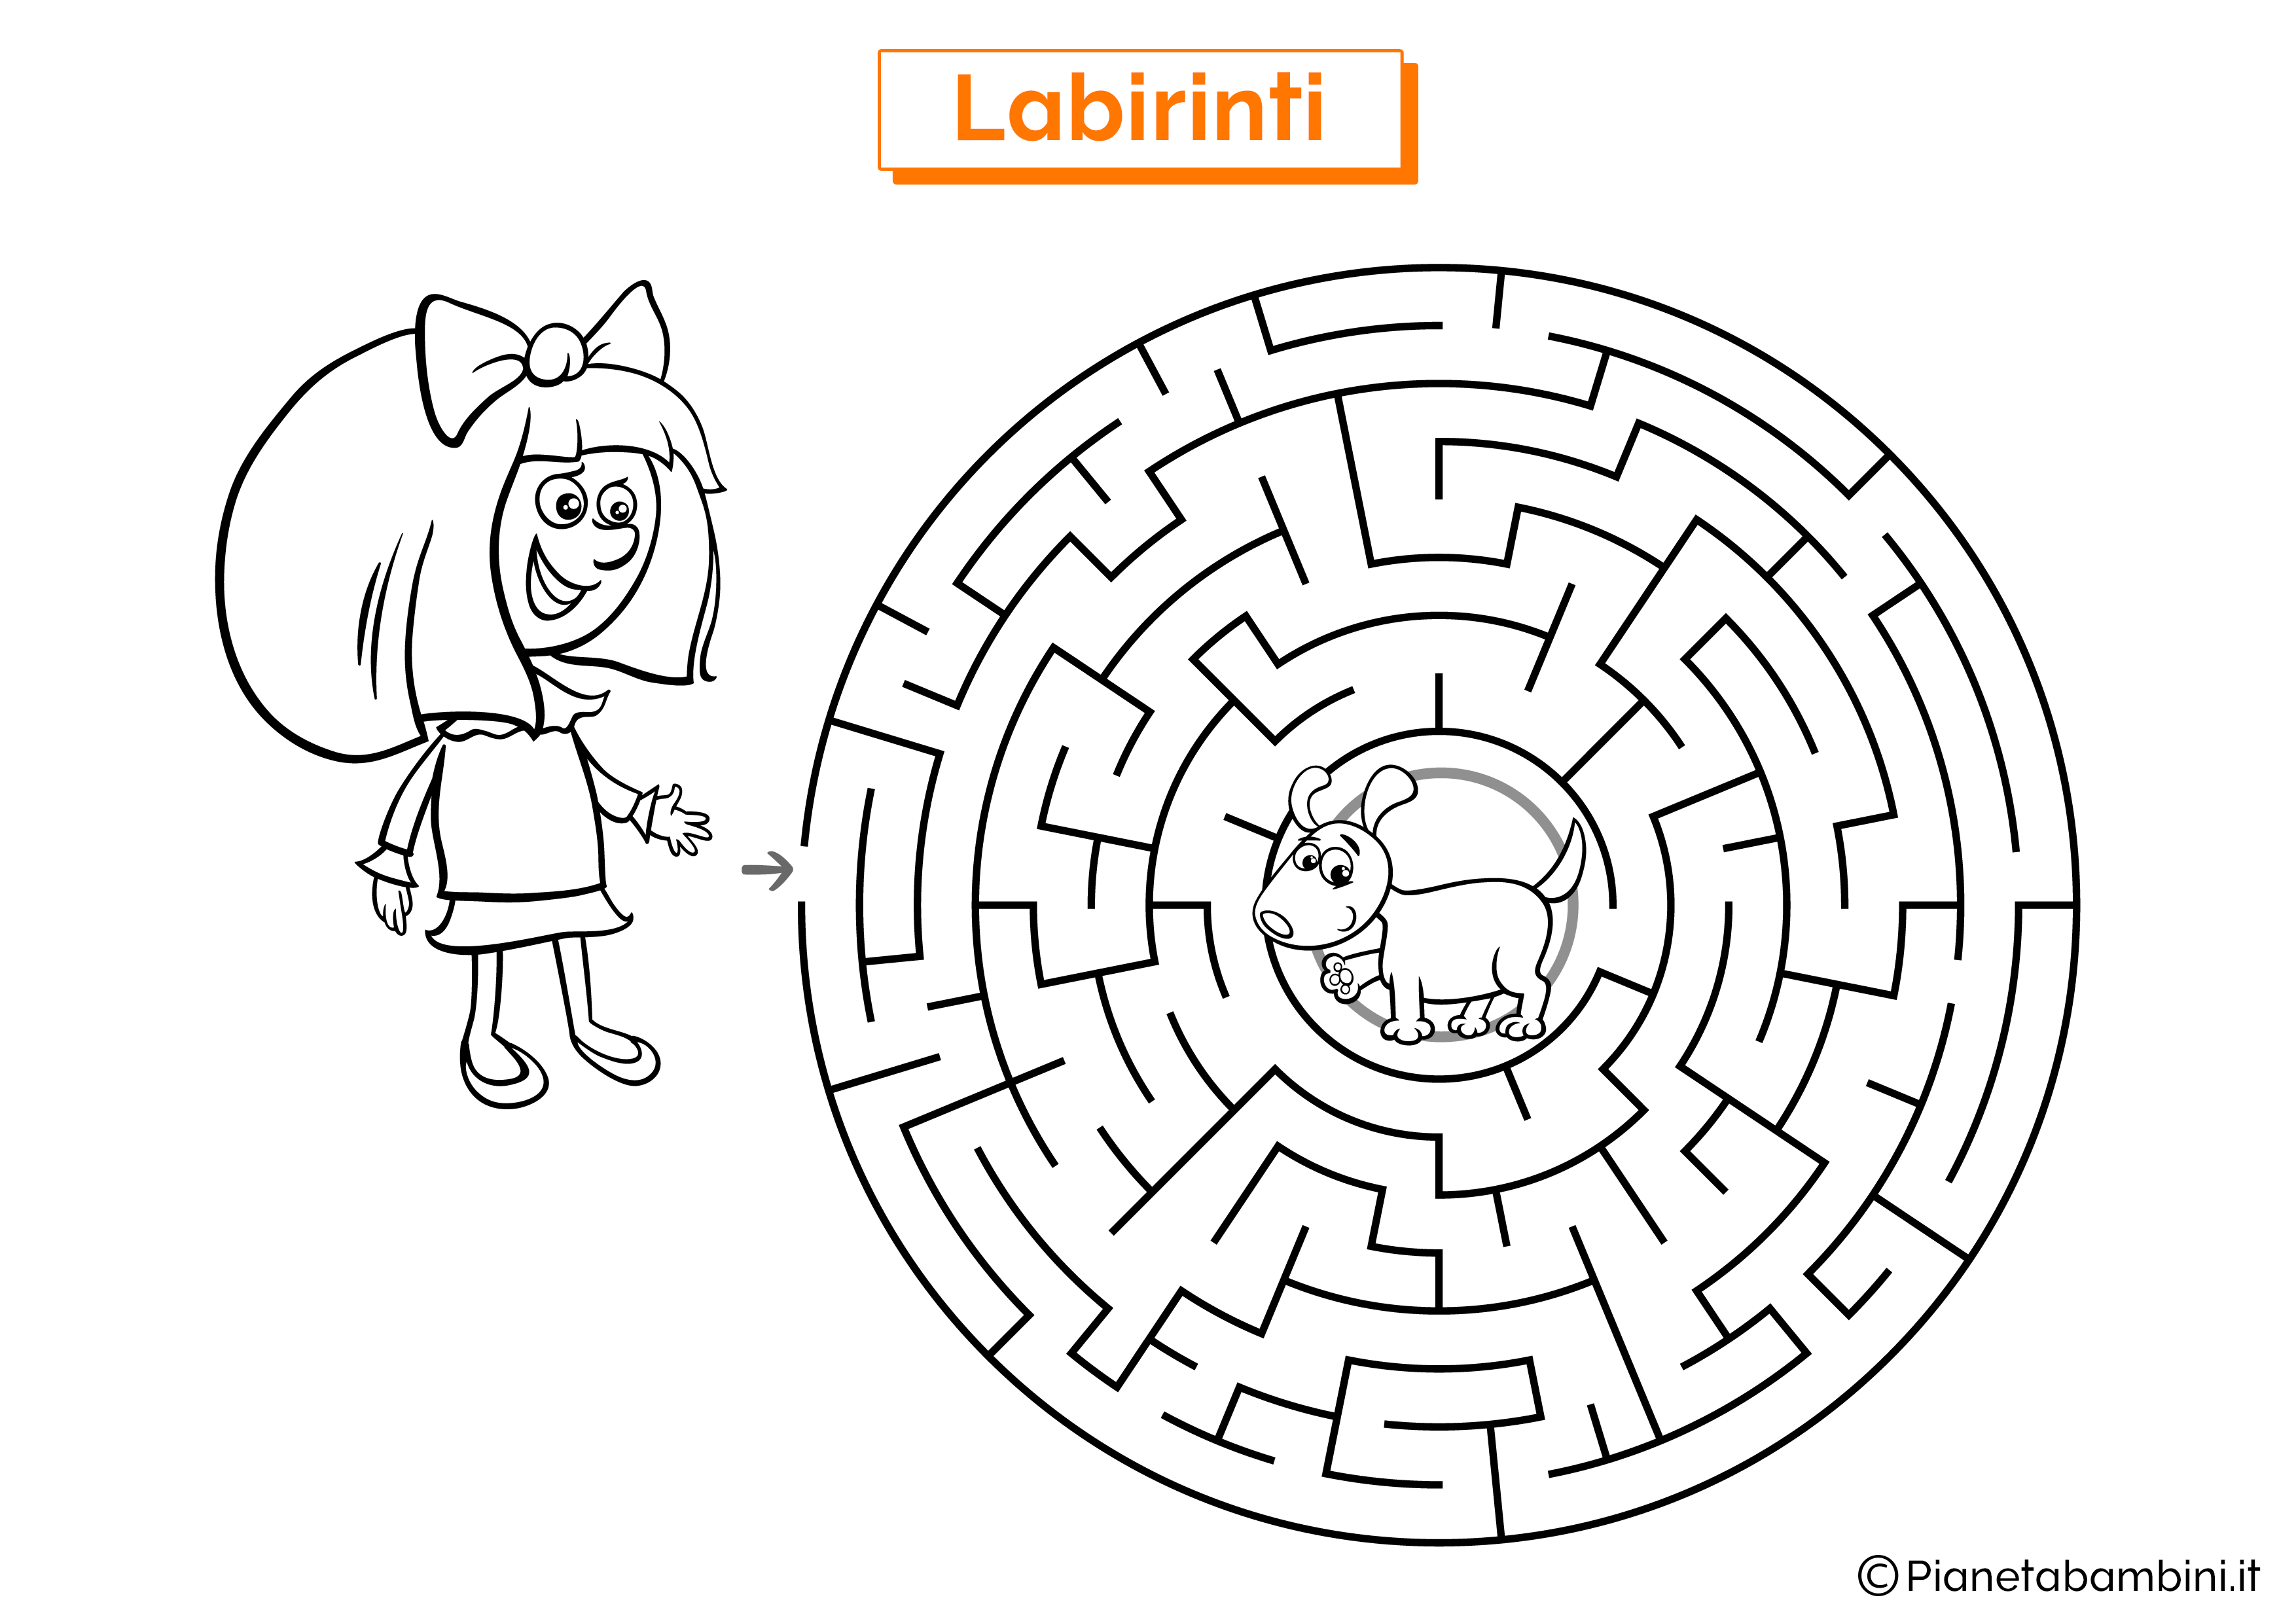 Labirinto con cane e bambina da stampare